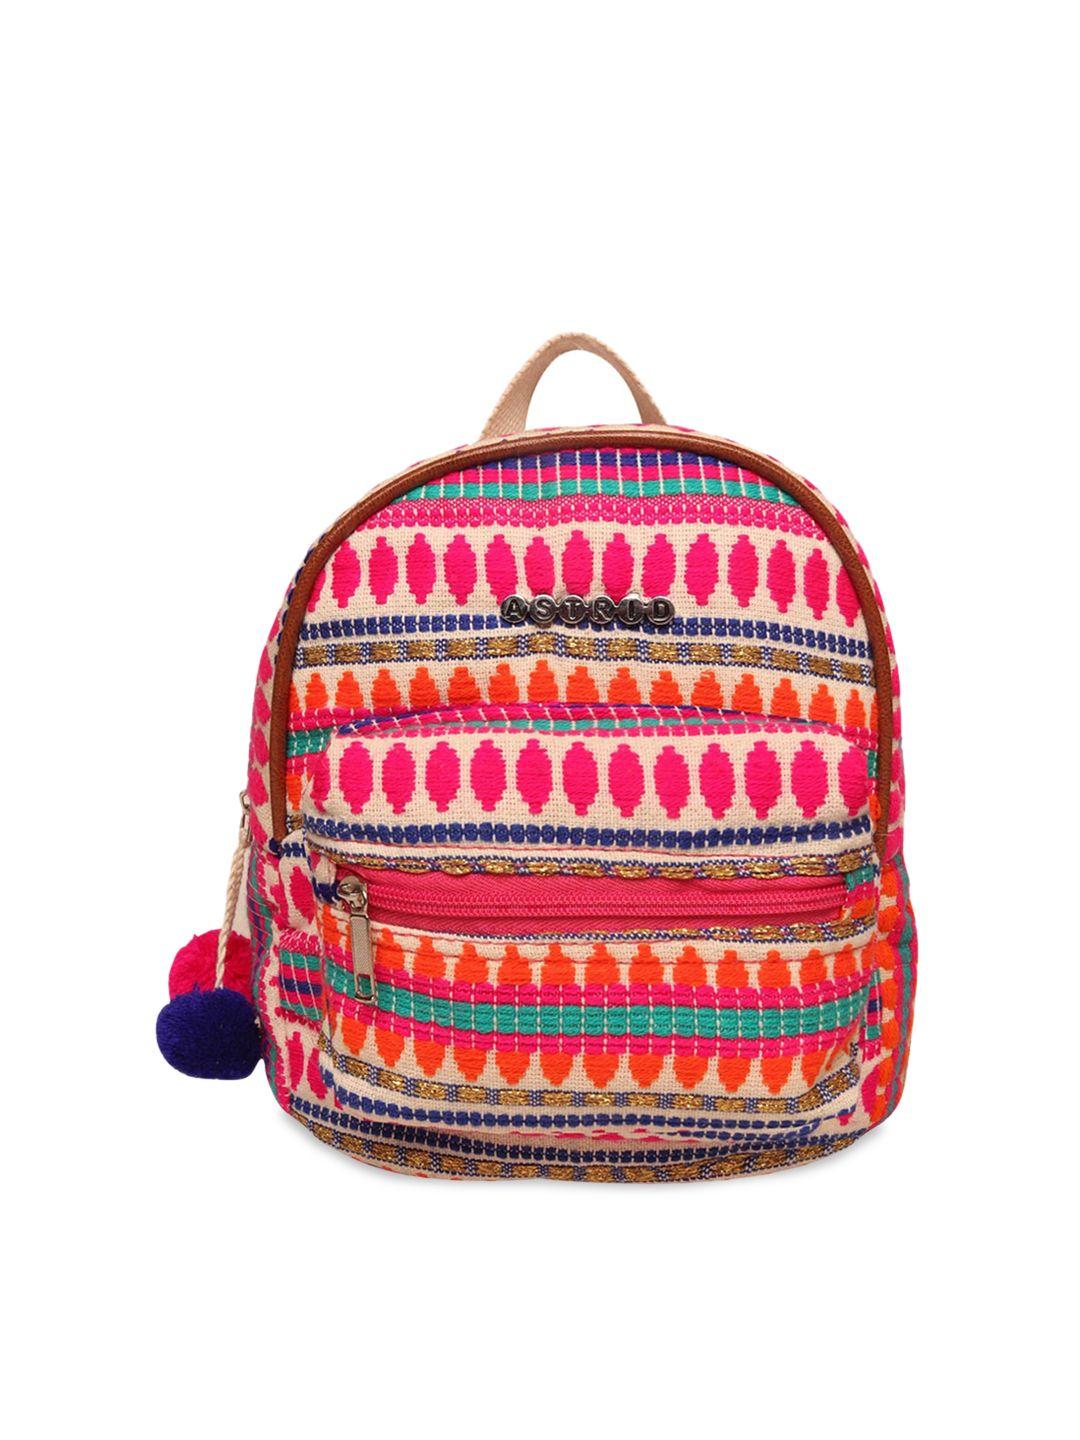 astrid-girls-pink-tasselled-backpack